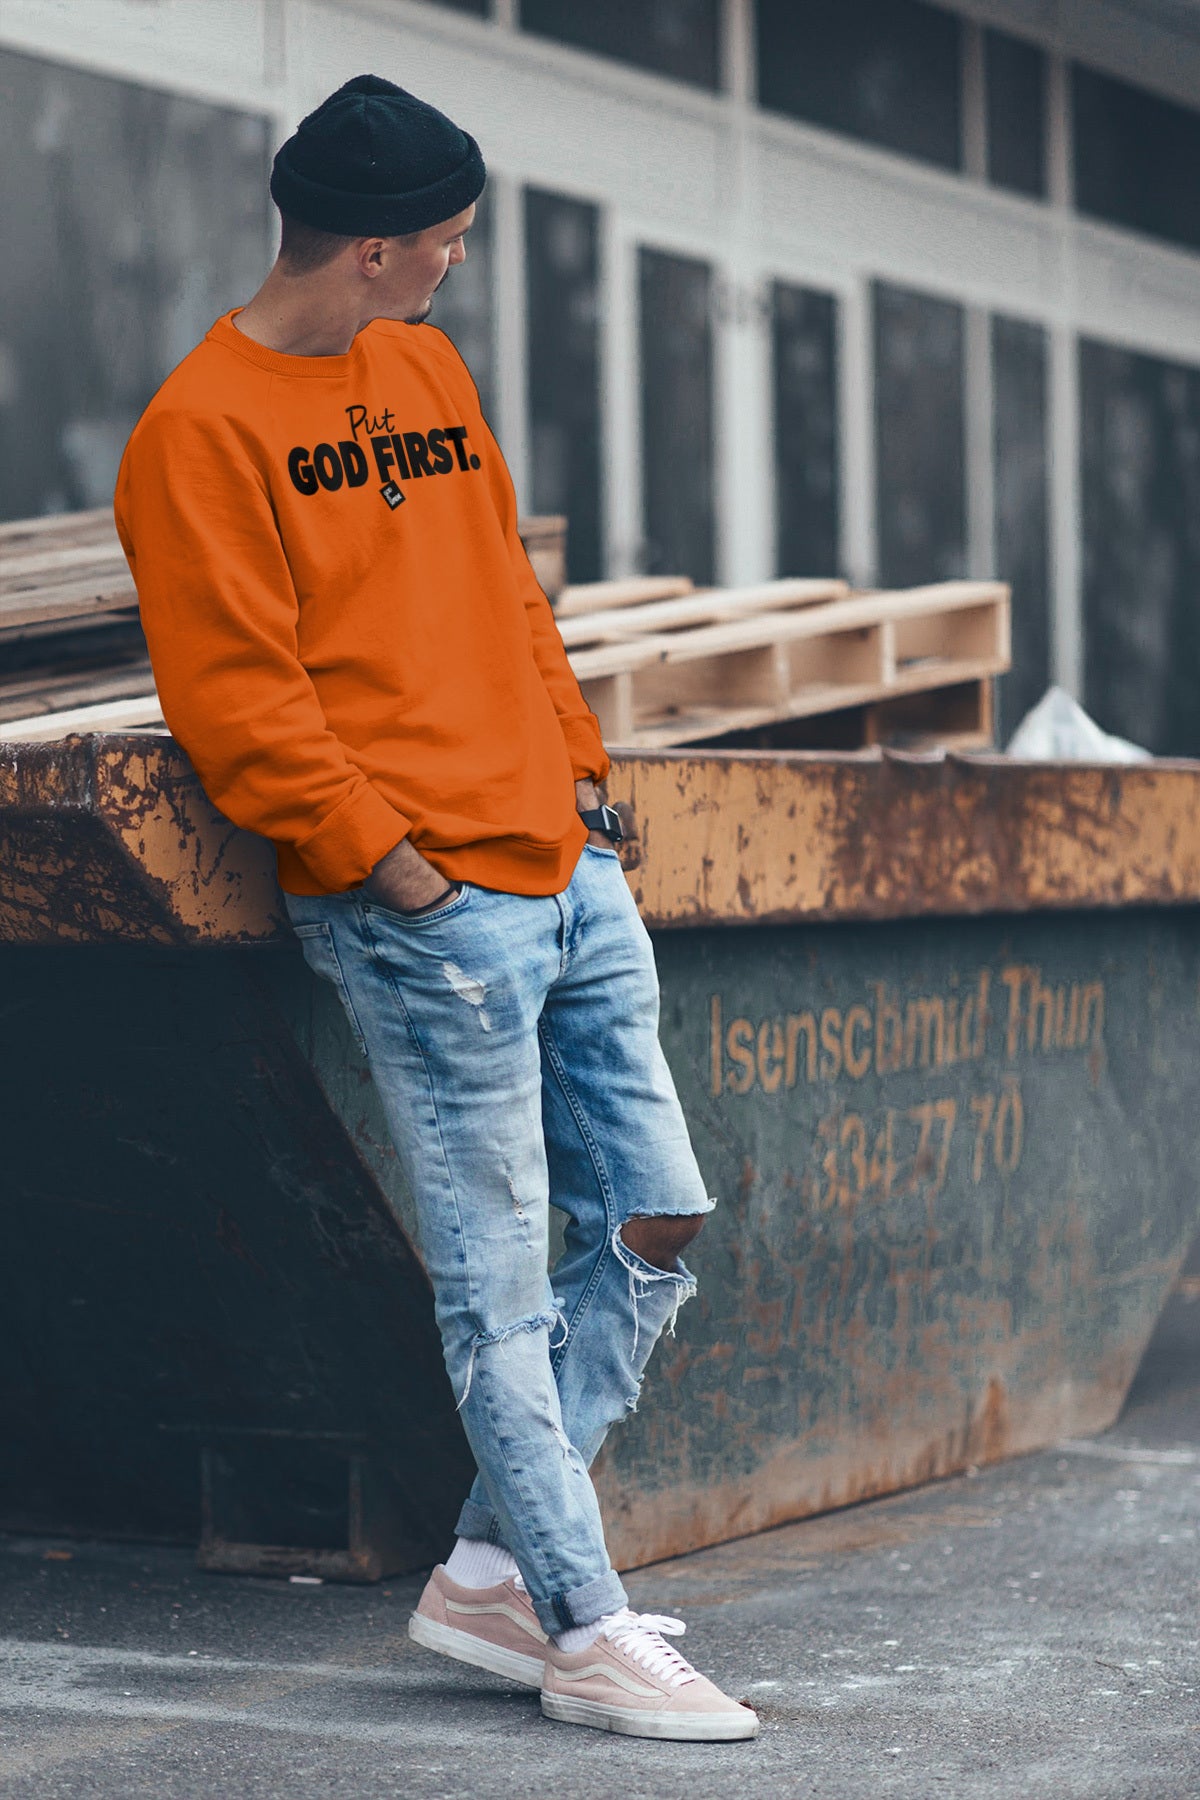 Put God First With Box/ Orange Long Sleeves Sweatshirt